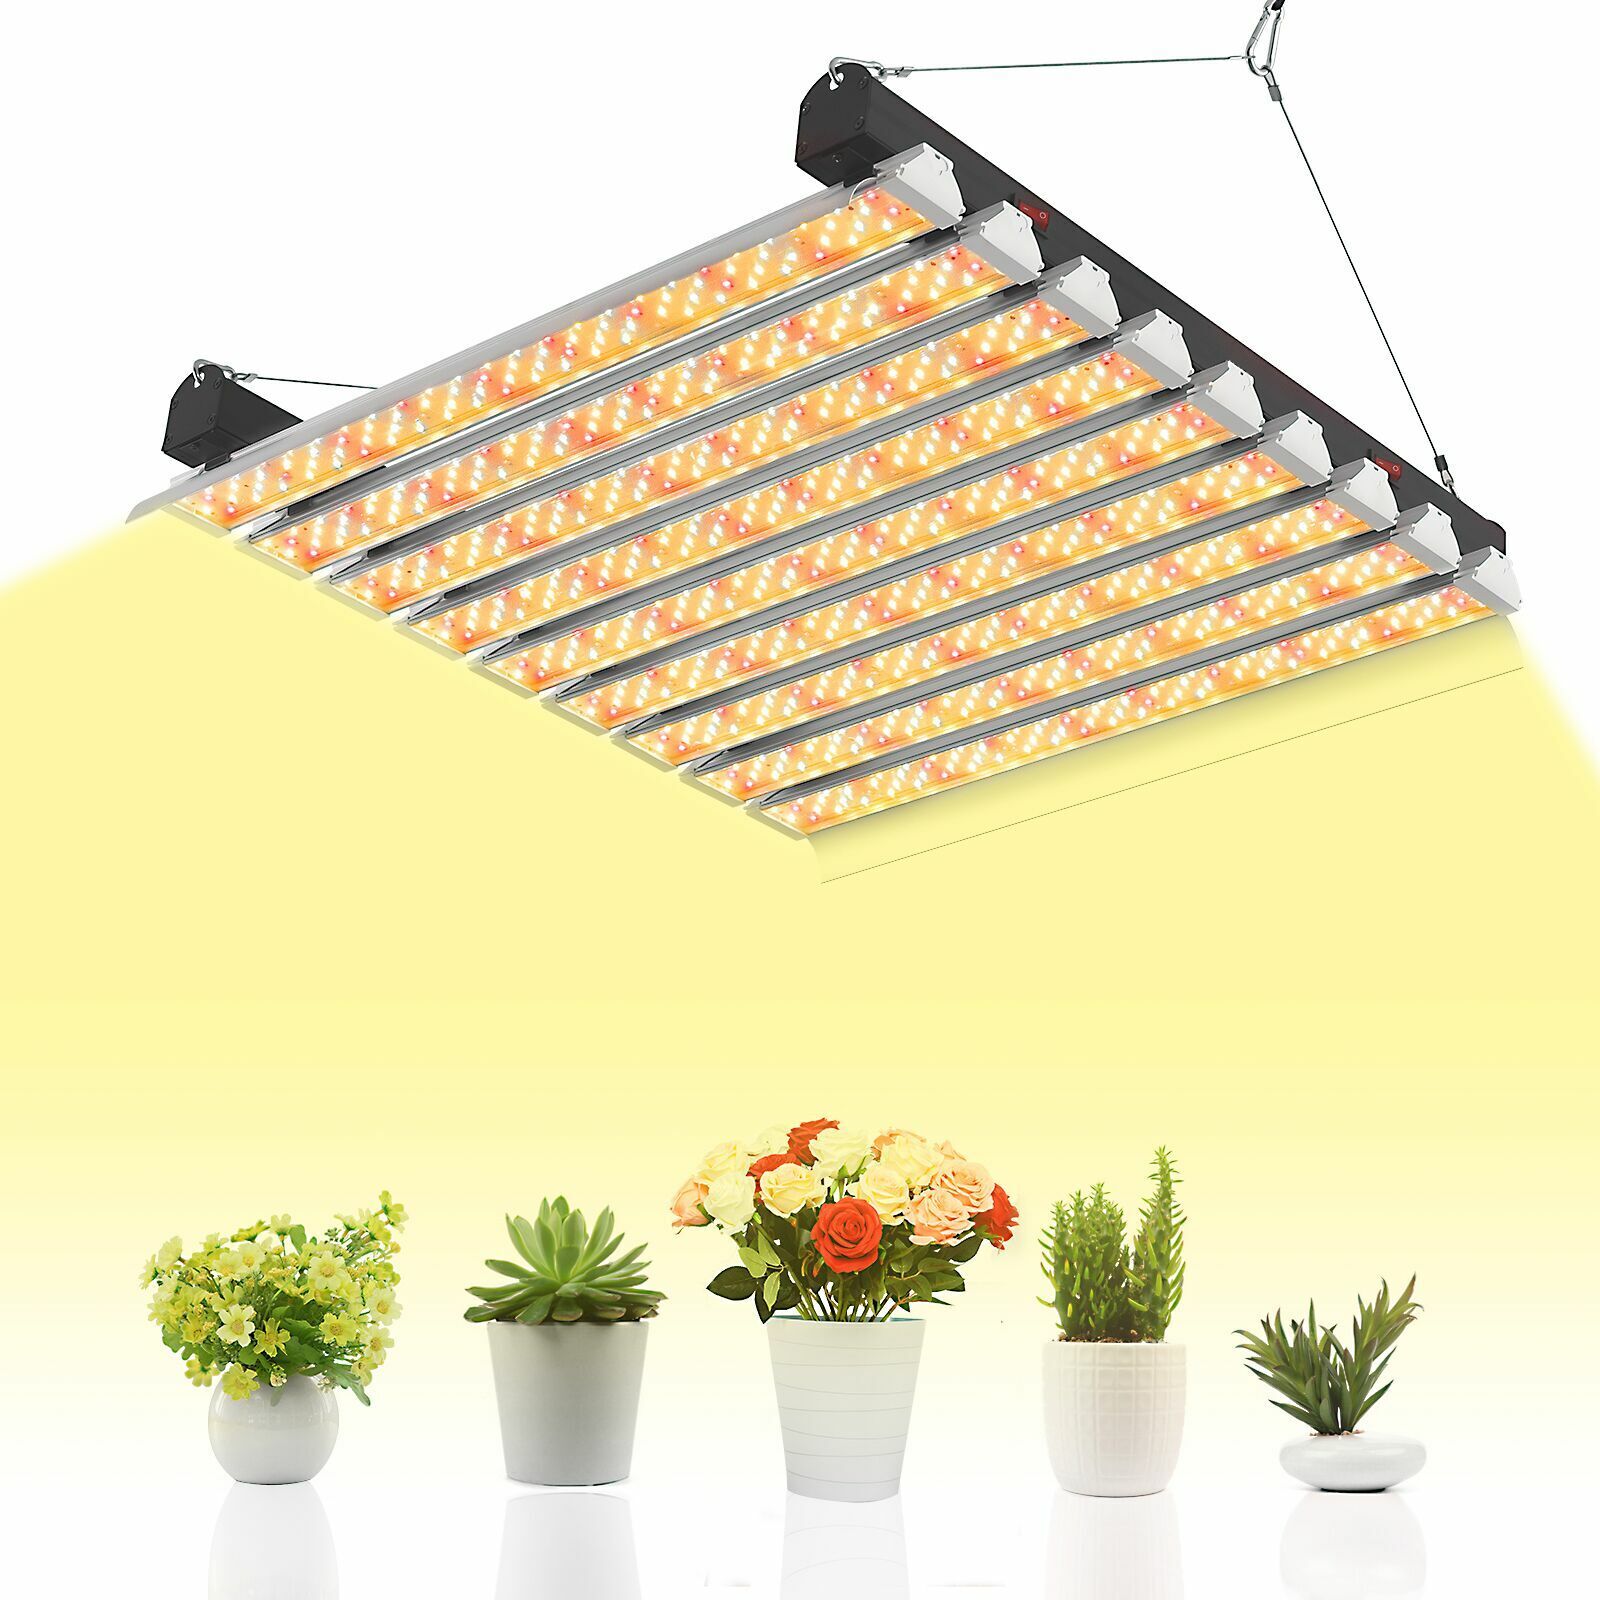 4000W LED Grow Light 6Ã—6FT Coverage Dual Switch Full Spectrum Grow Lamp Plants